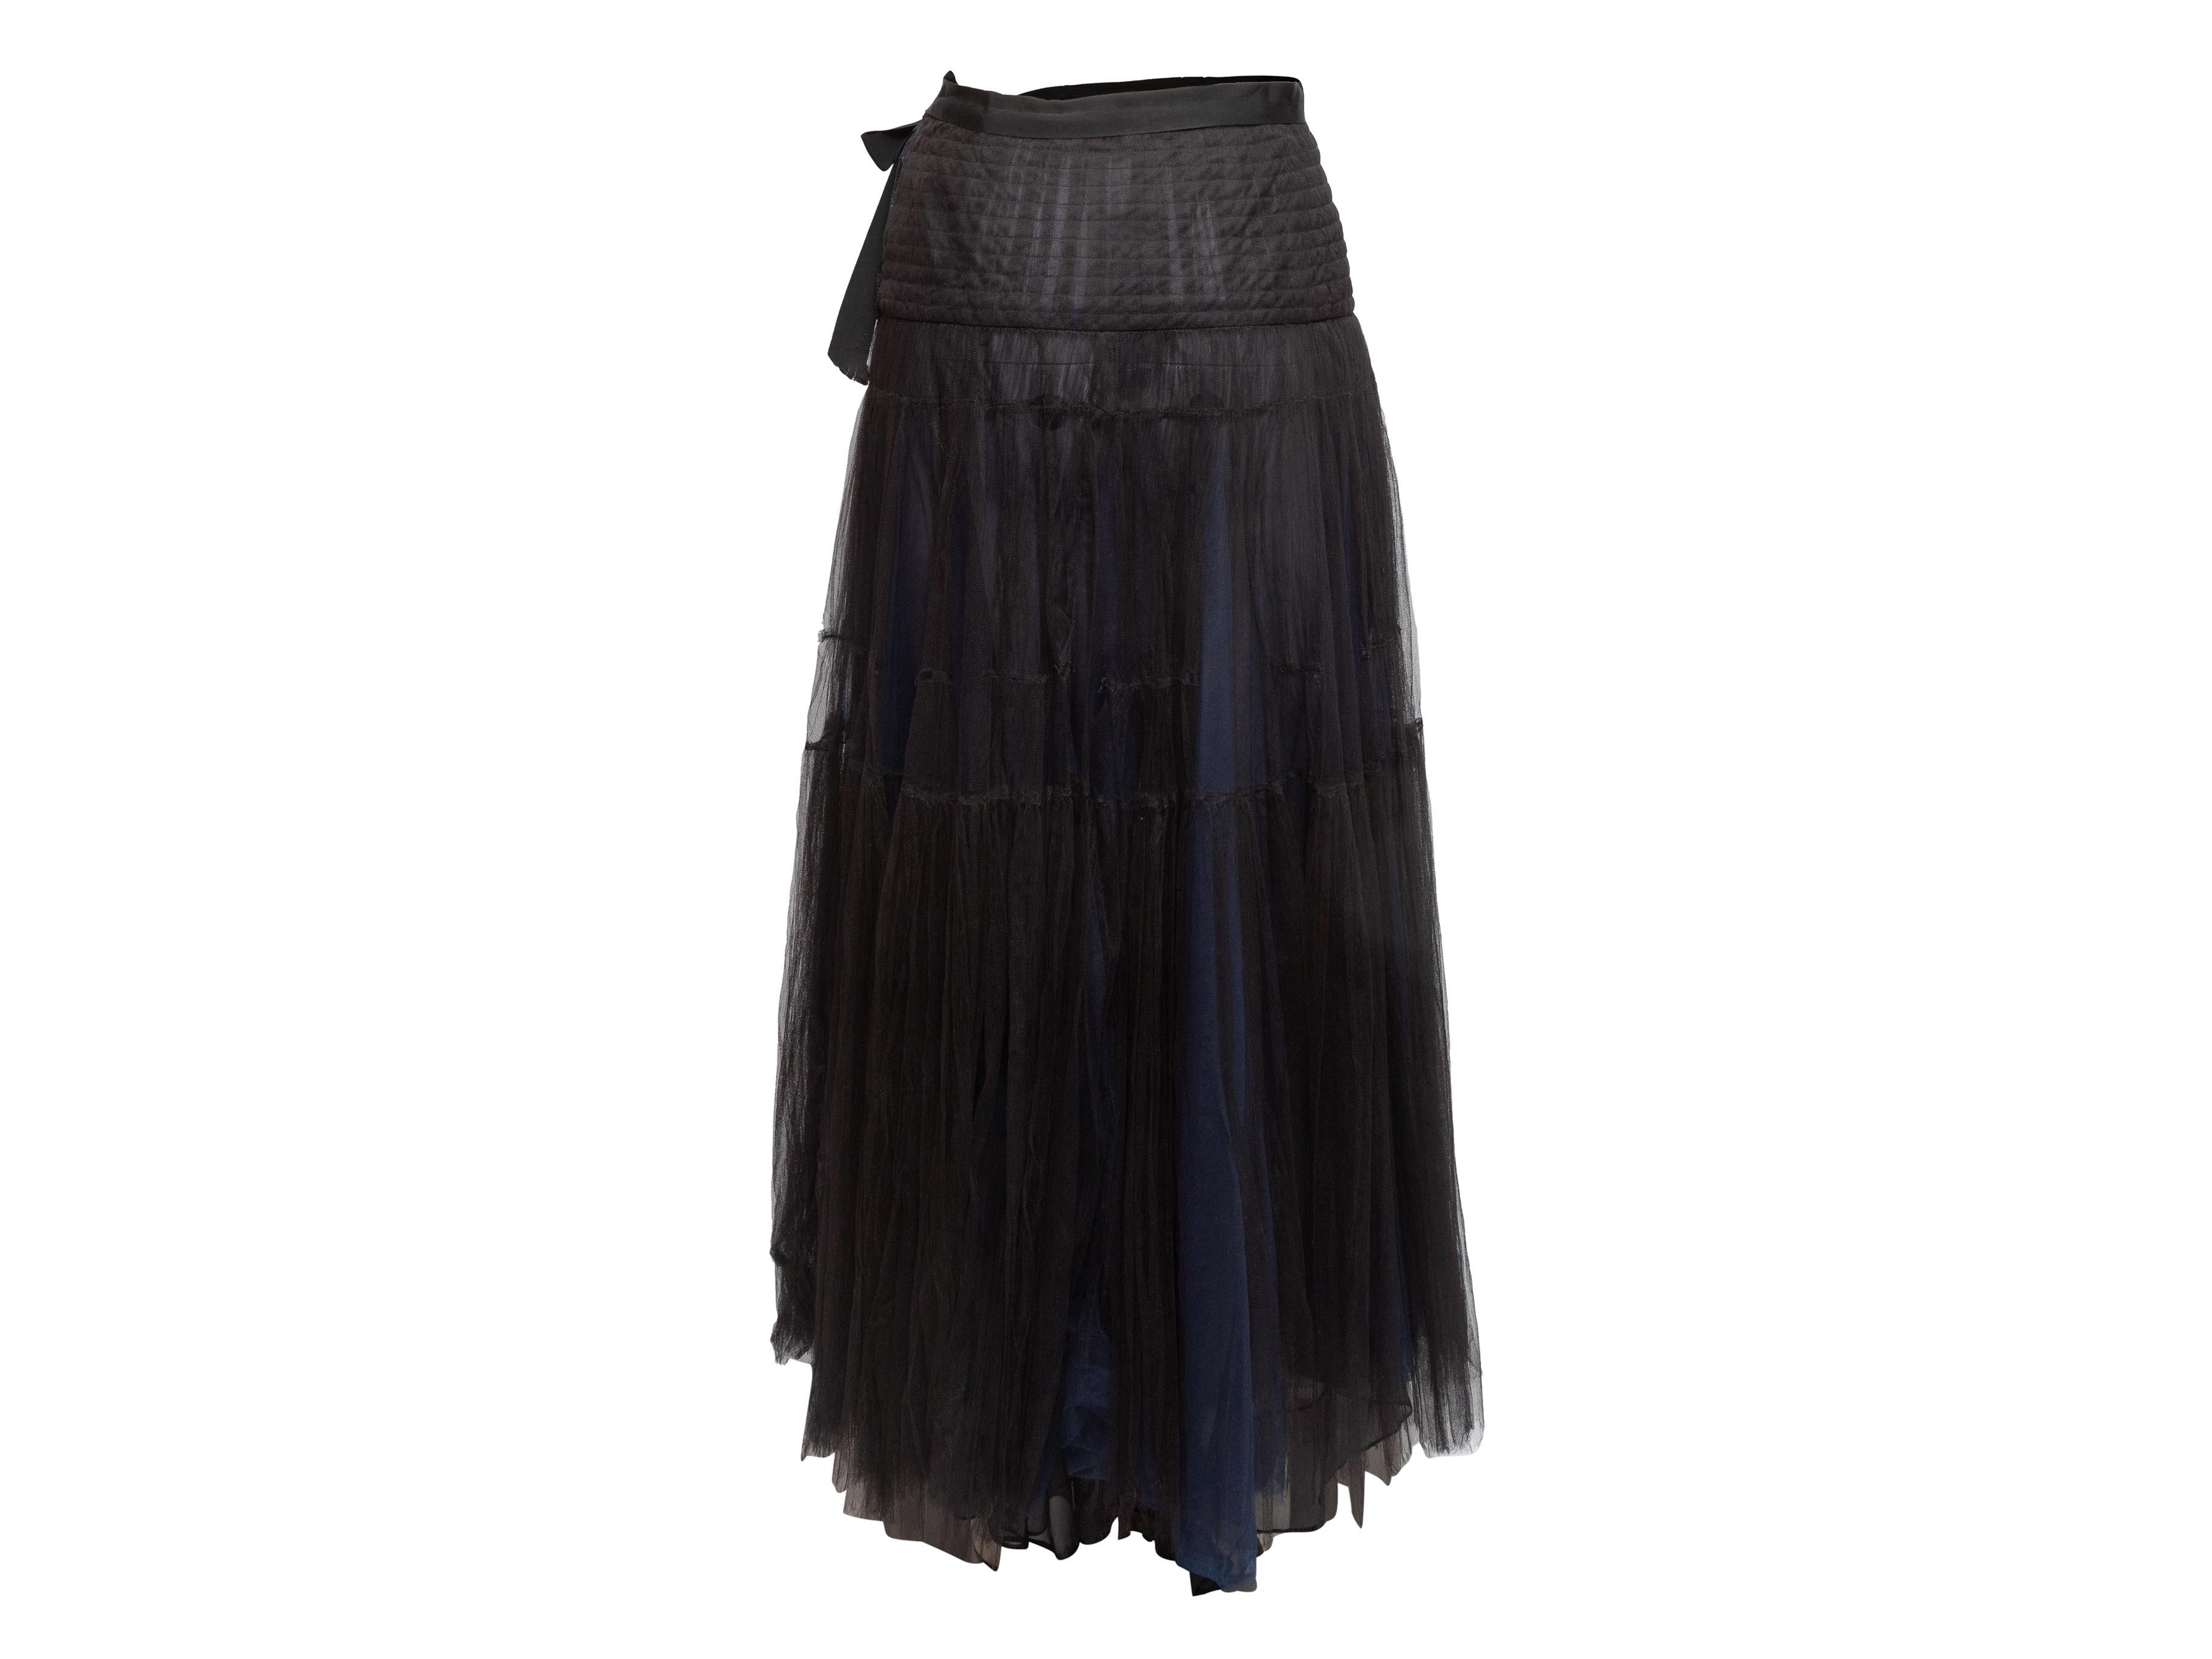 Vintage Black & Navy Oscar de la Renta Tulle Maxi Skirt In Good Condition For Sale In New York, NY